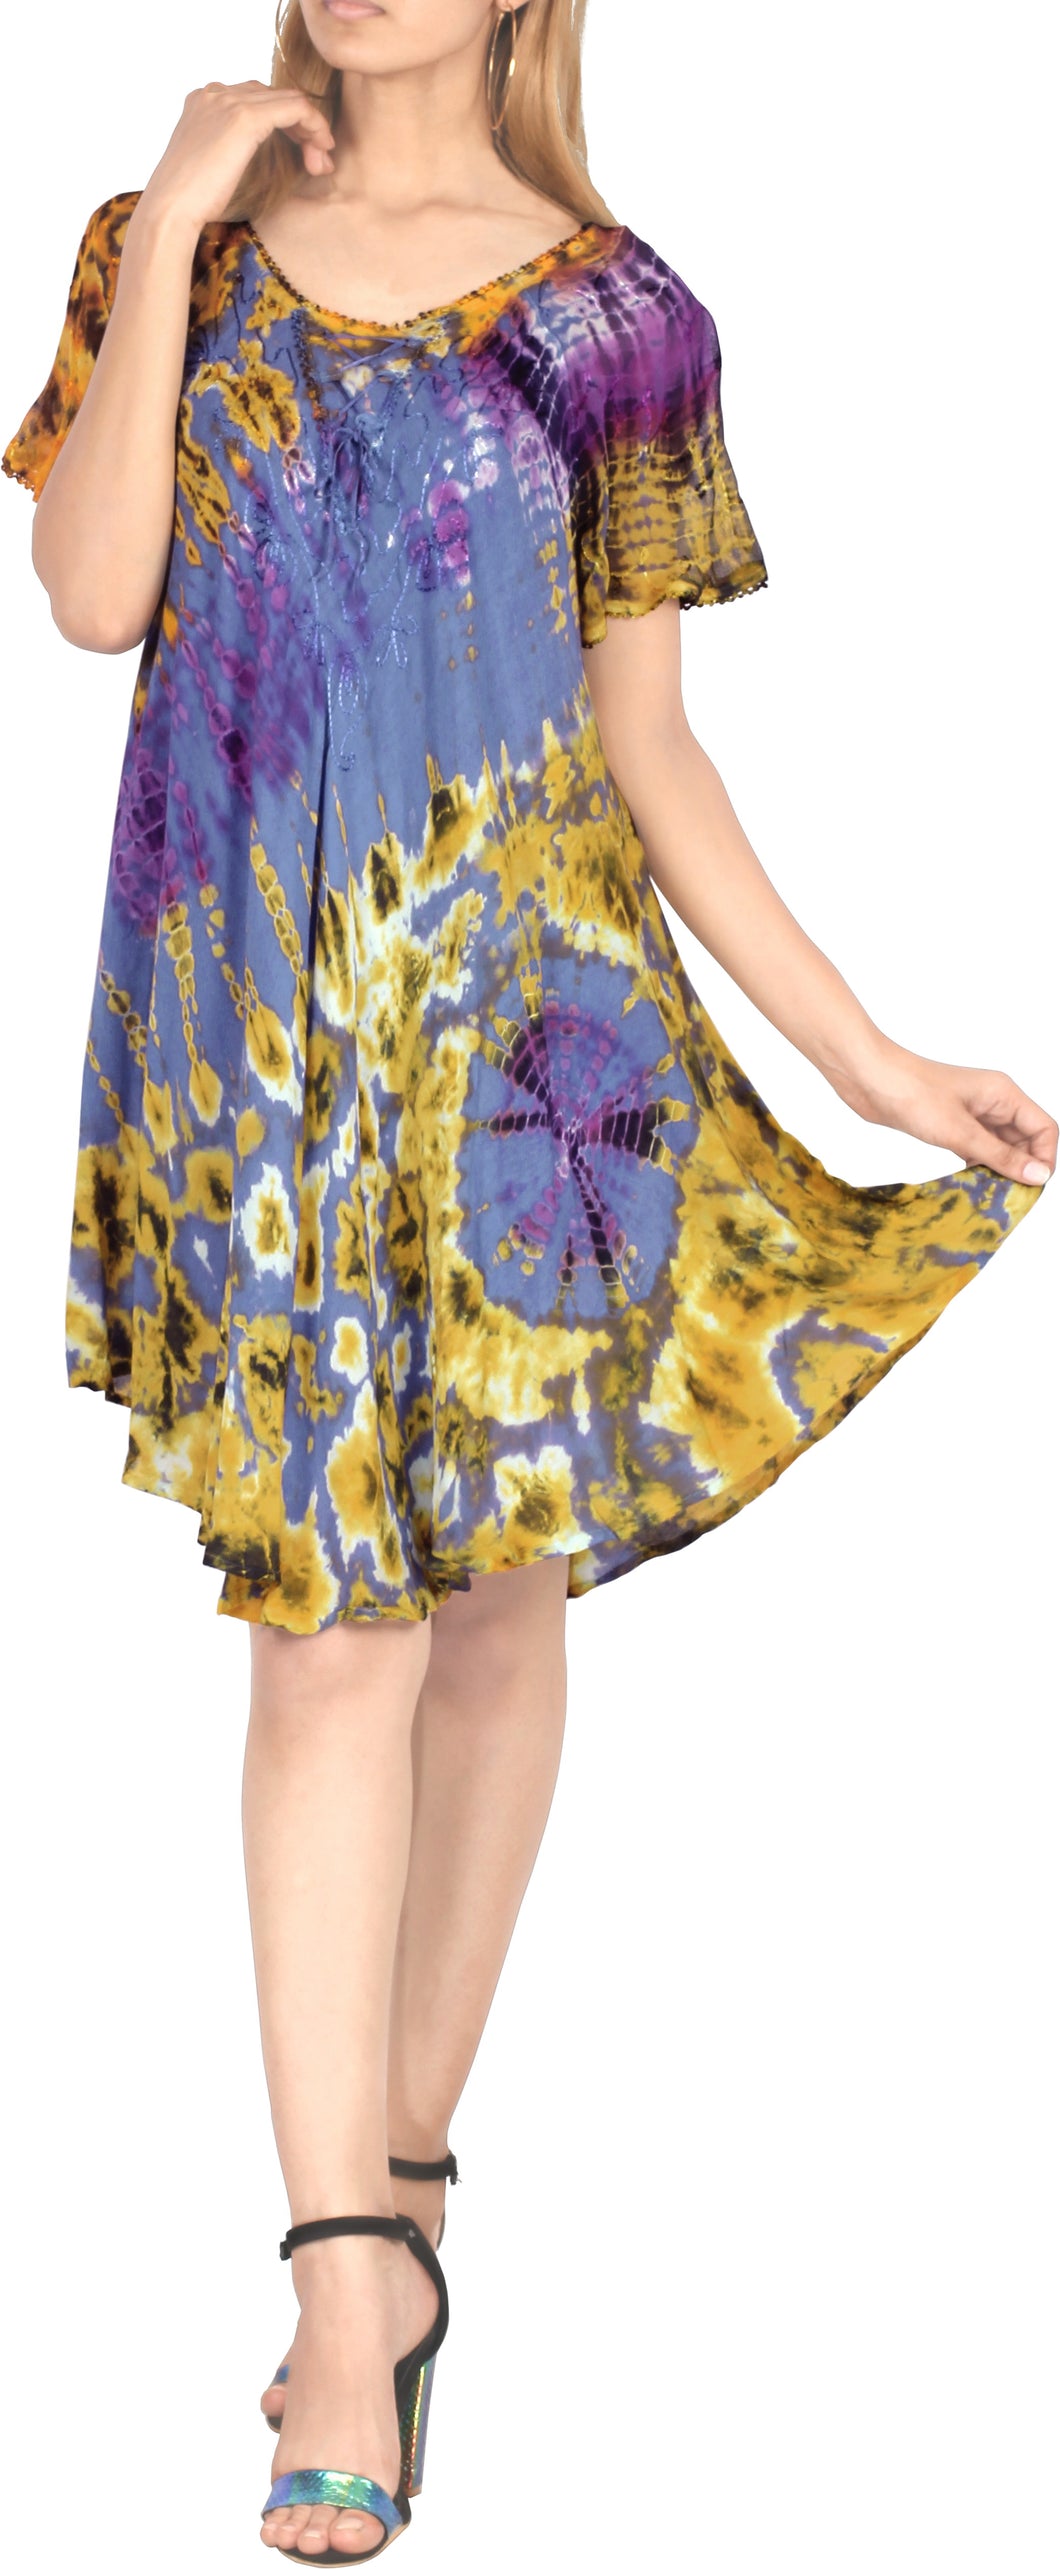 LA LEELA Girl Rayon Cover Up Short Dress Blue US: 14 (L) THRU Plus Size 20W (2X)